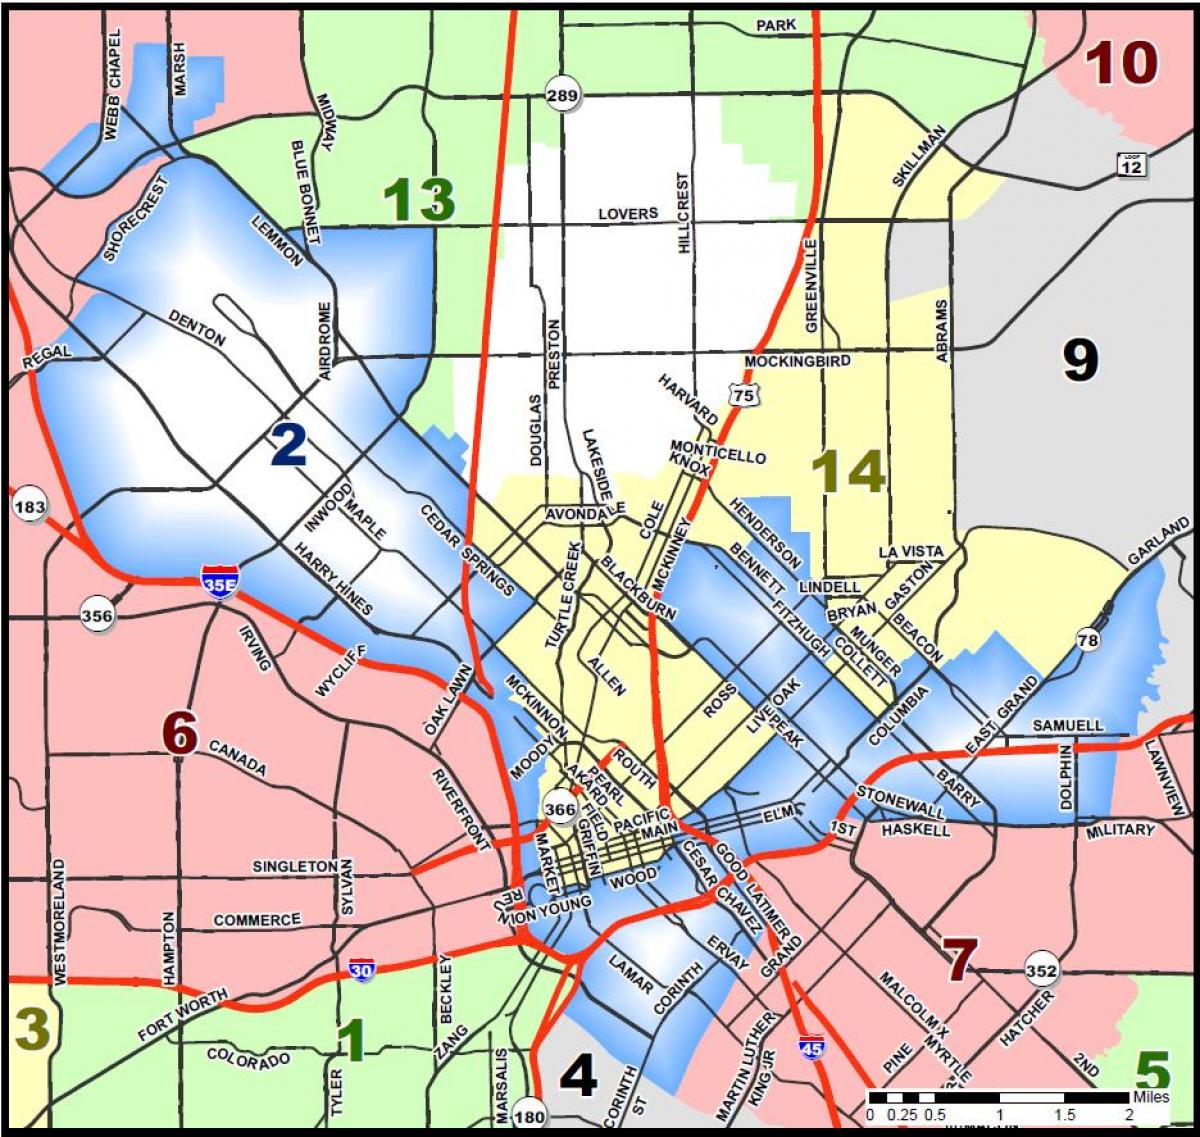 hiria Dallas zonifikazioa mapa